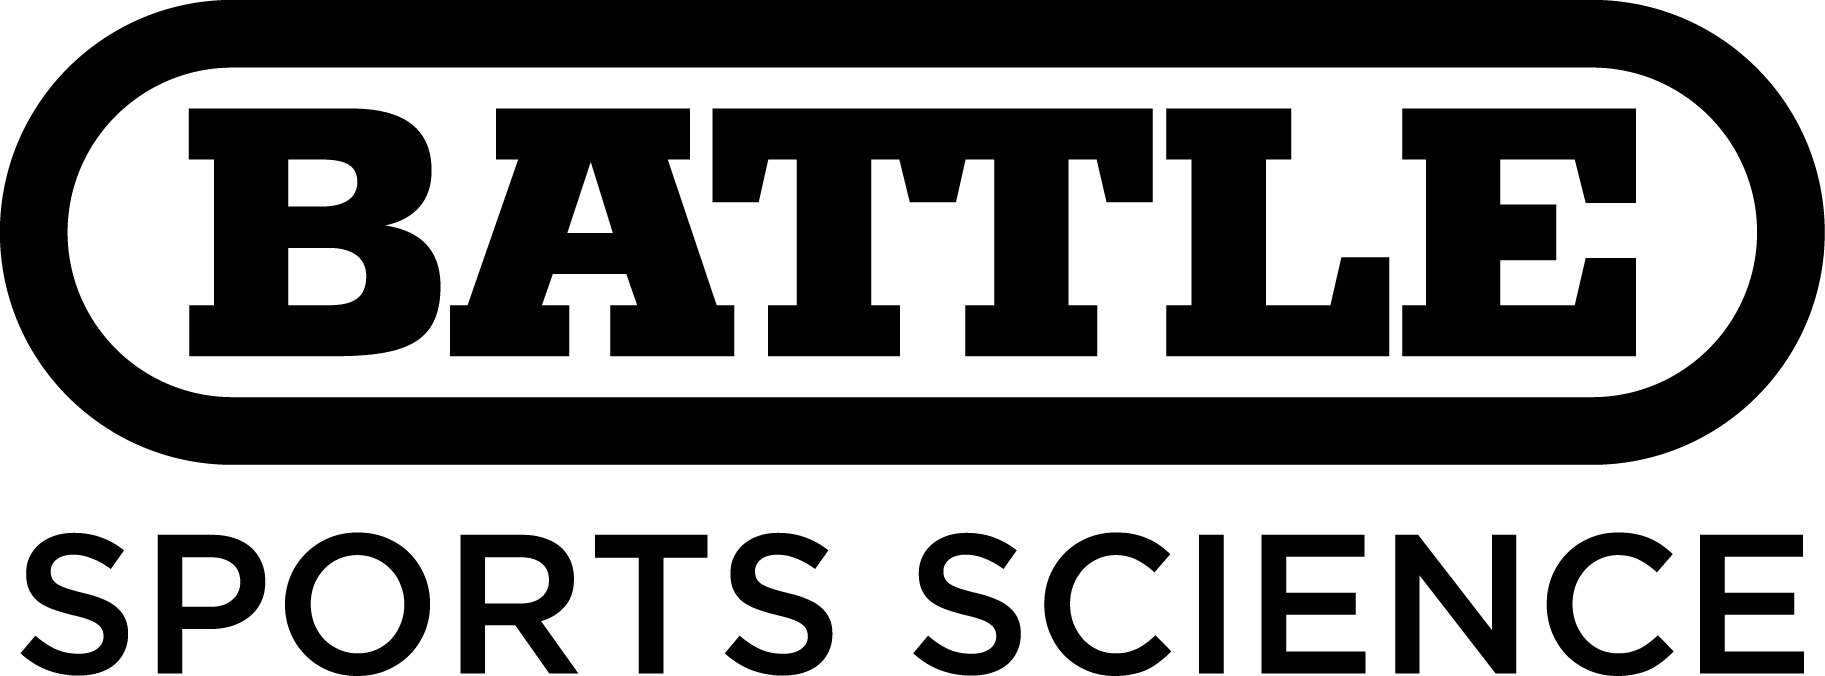 Battle Sports Science LLC